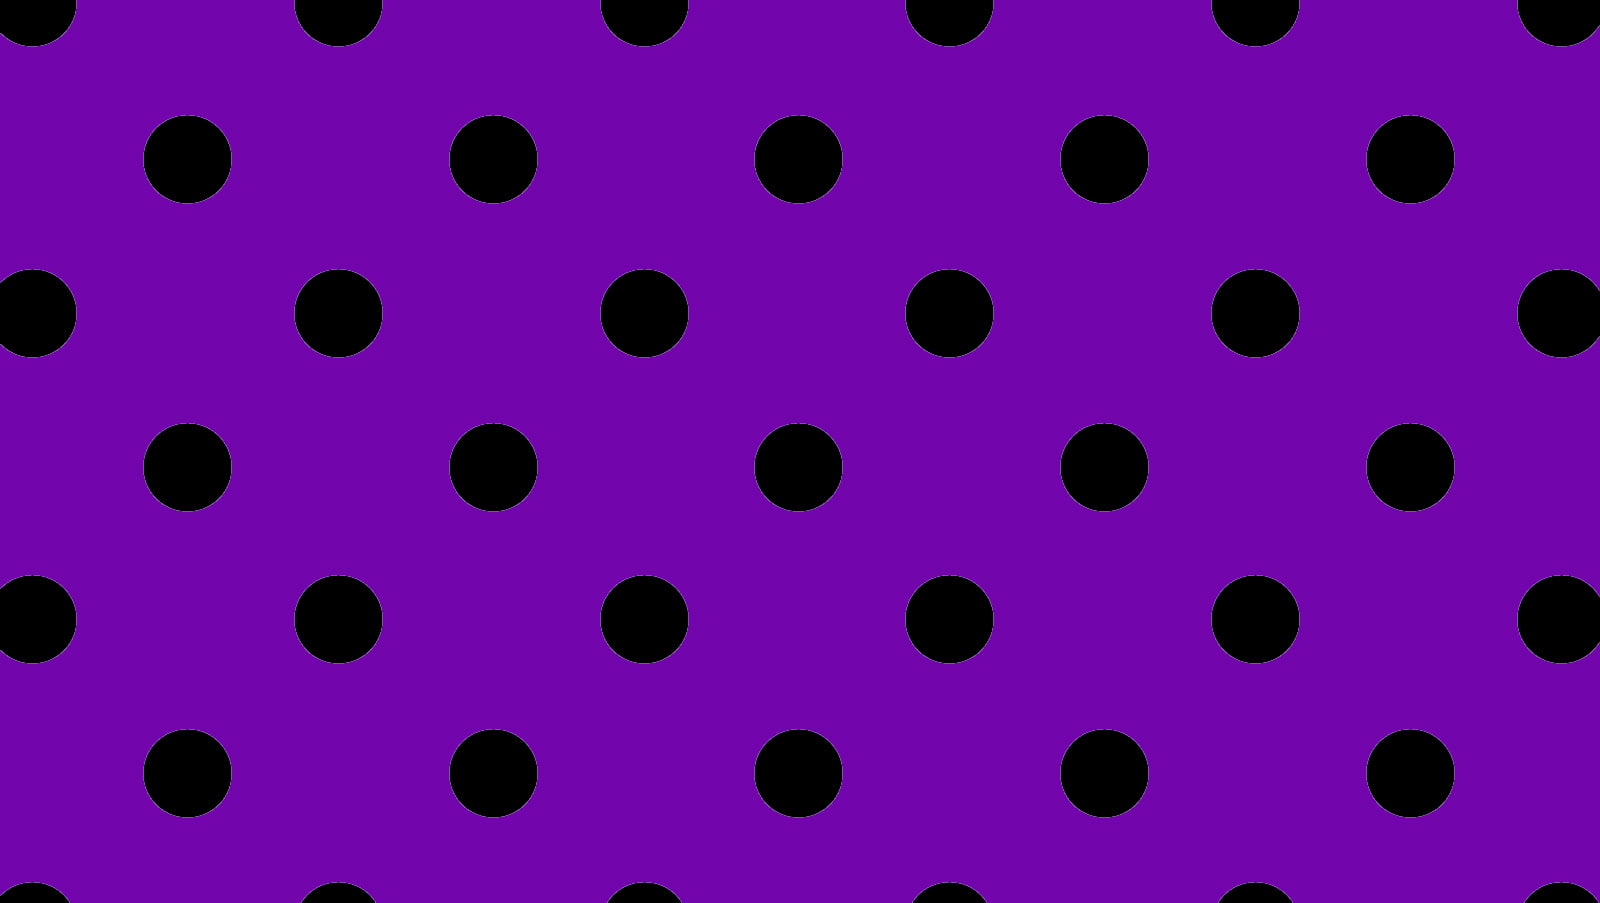 Art, Abstract, Polka Dot, Black Balls, Purple Background, purple and black polka dot surface